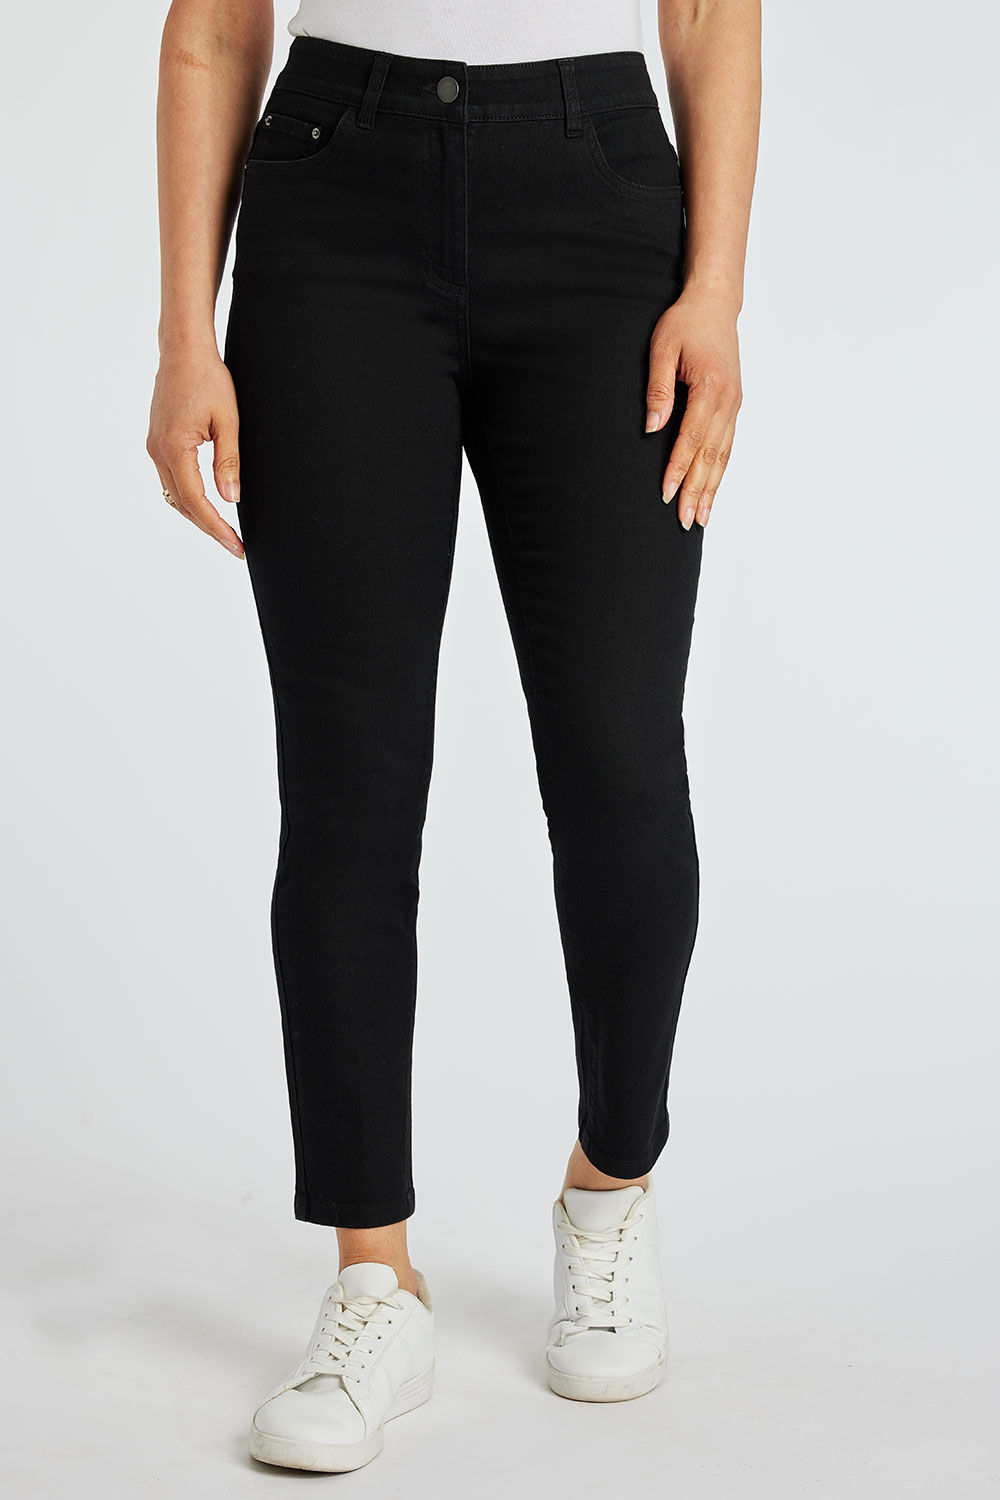 Bonmarche Women’s Black Cotton Casual The SUSIE Slim Leg Jeans, Size: 12